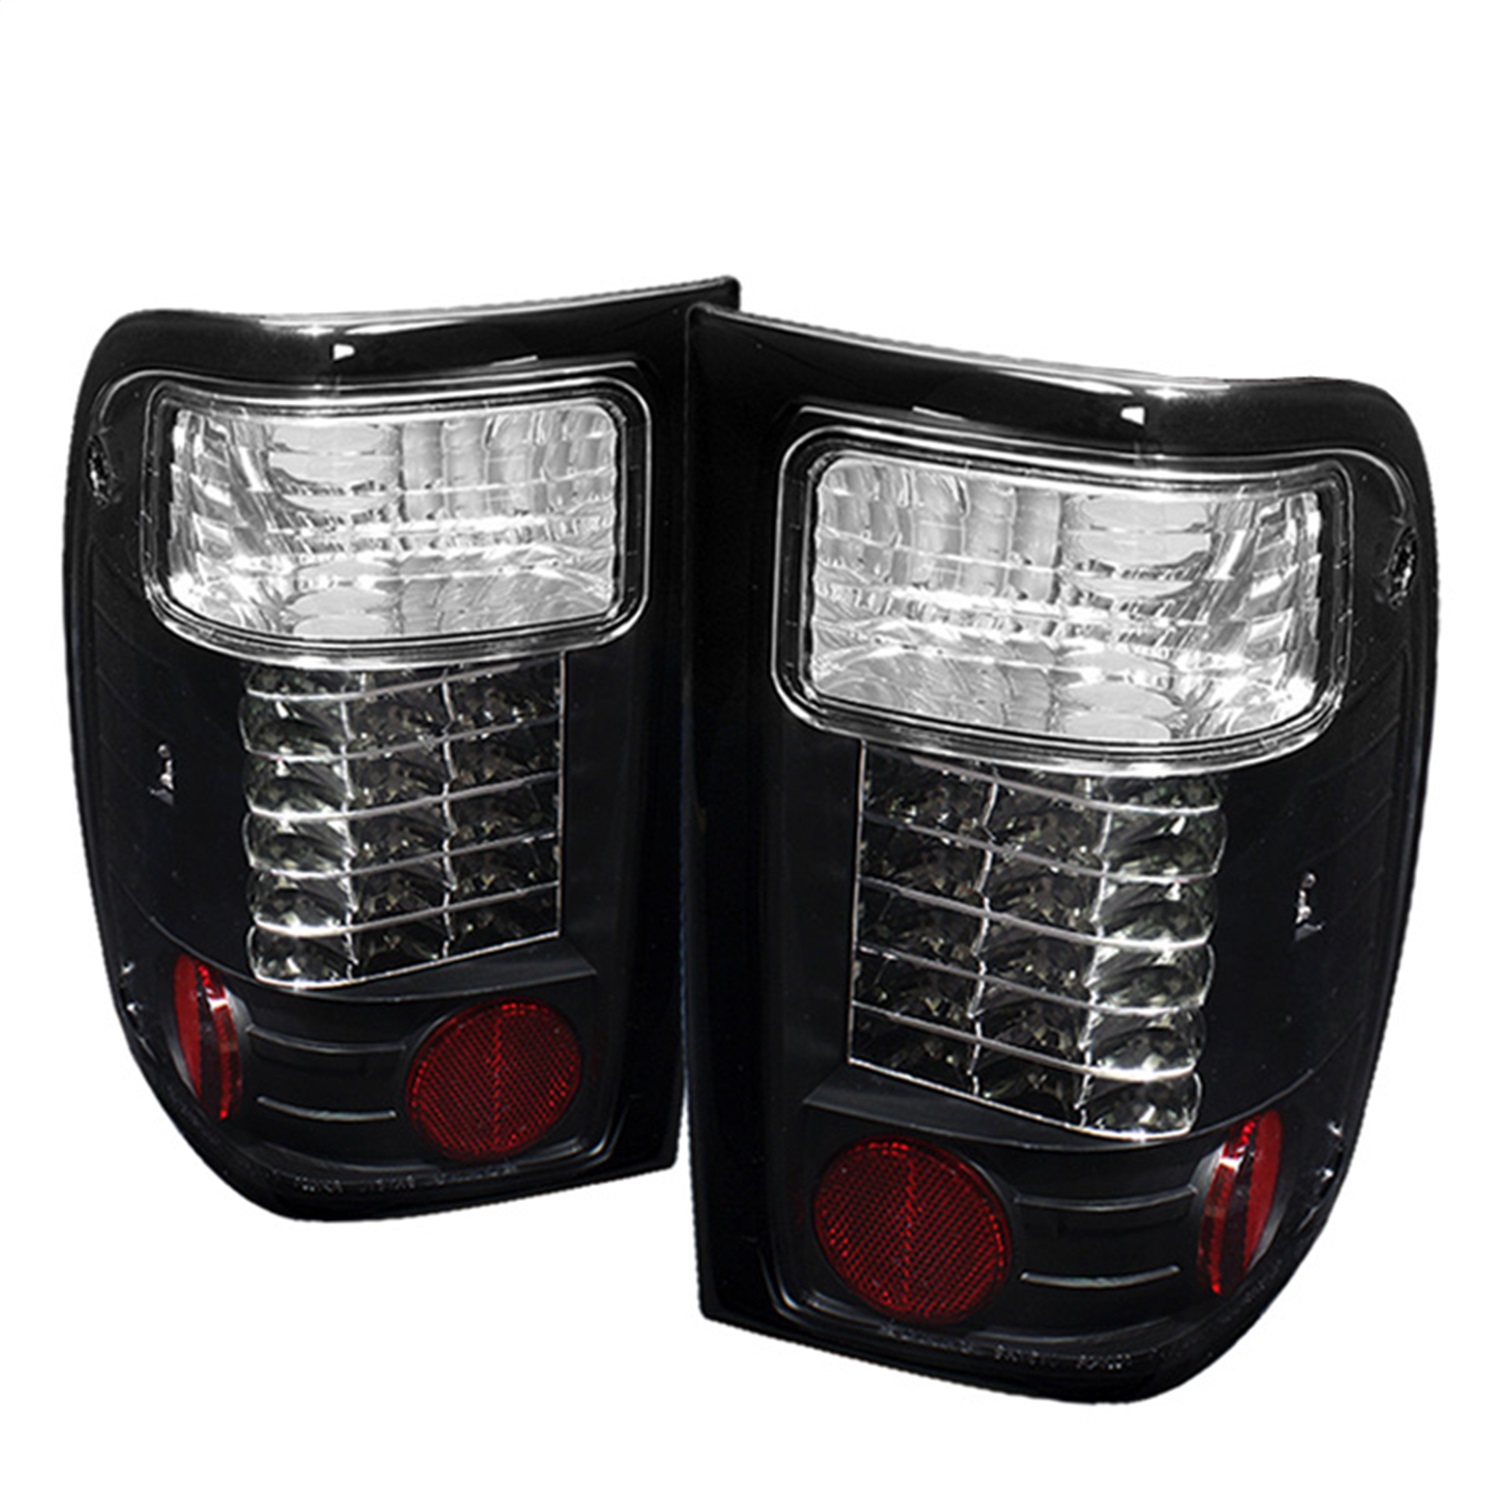 Spyder Auto 5003836 LED Tail Lights Fits 01-05 Ranger